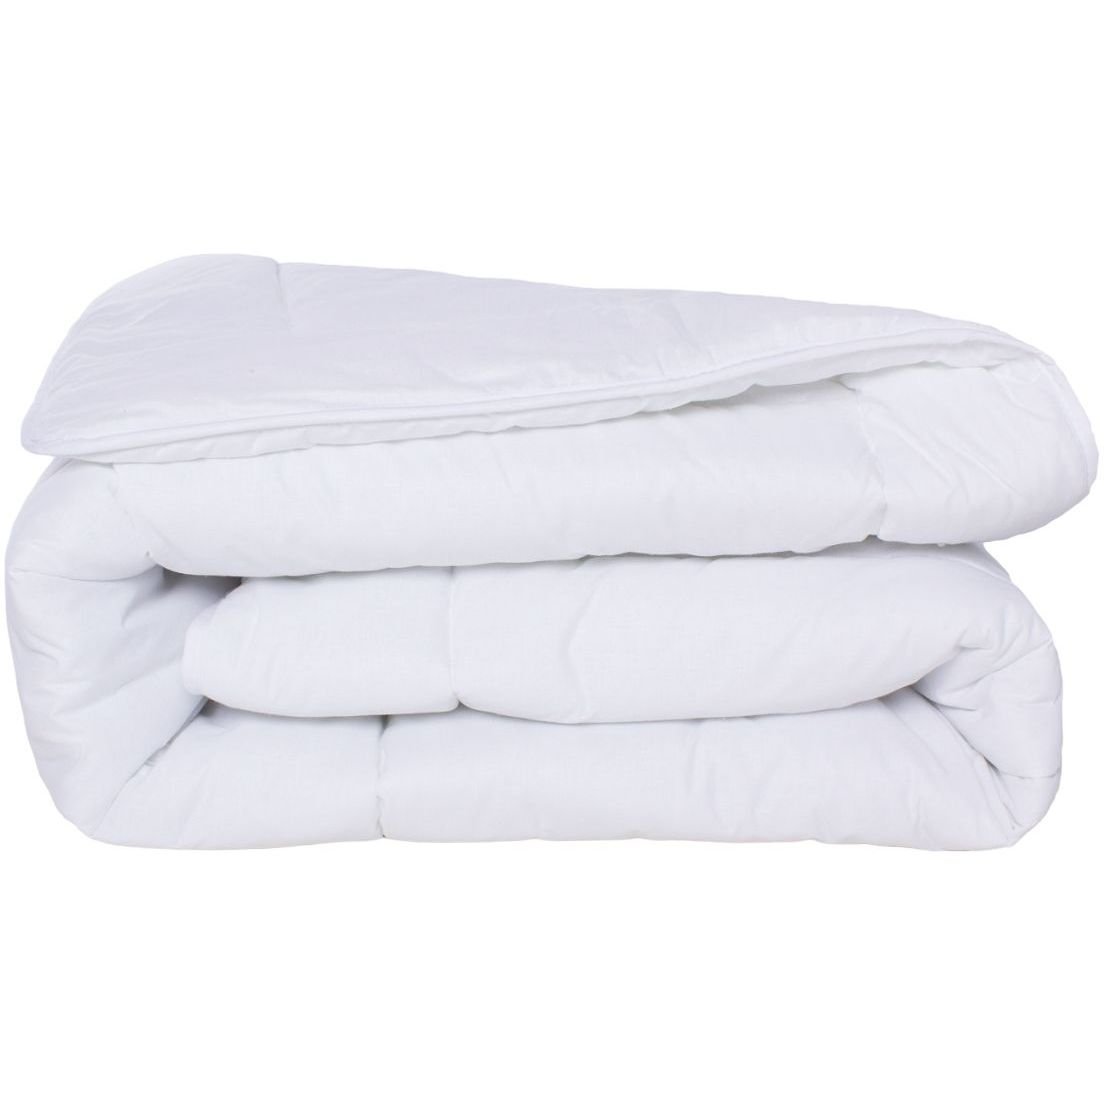 Одеяло шерстяное MirSon Bianco Экстра Премиум №0787, зимнее, 155x215 см, белое - фото 1